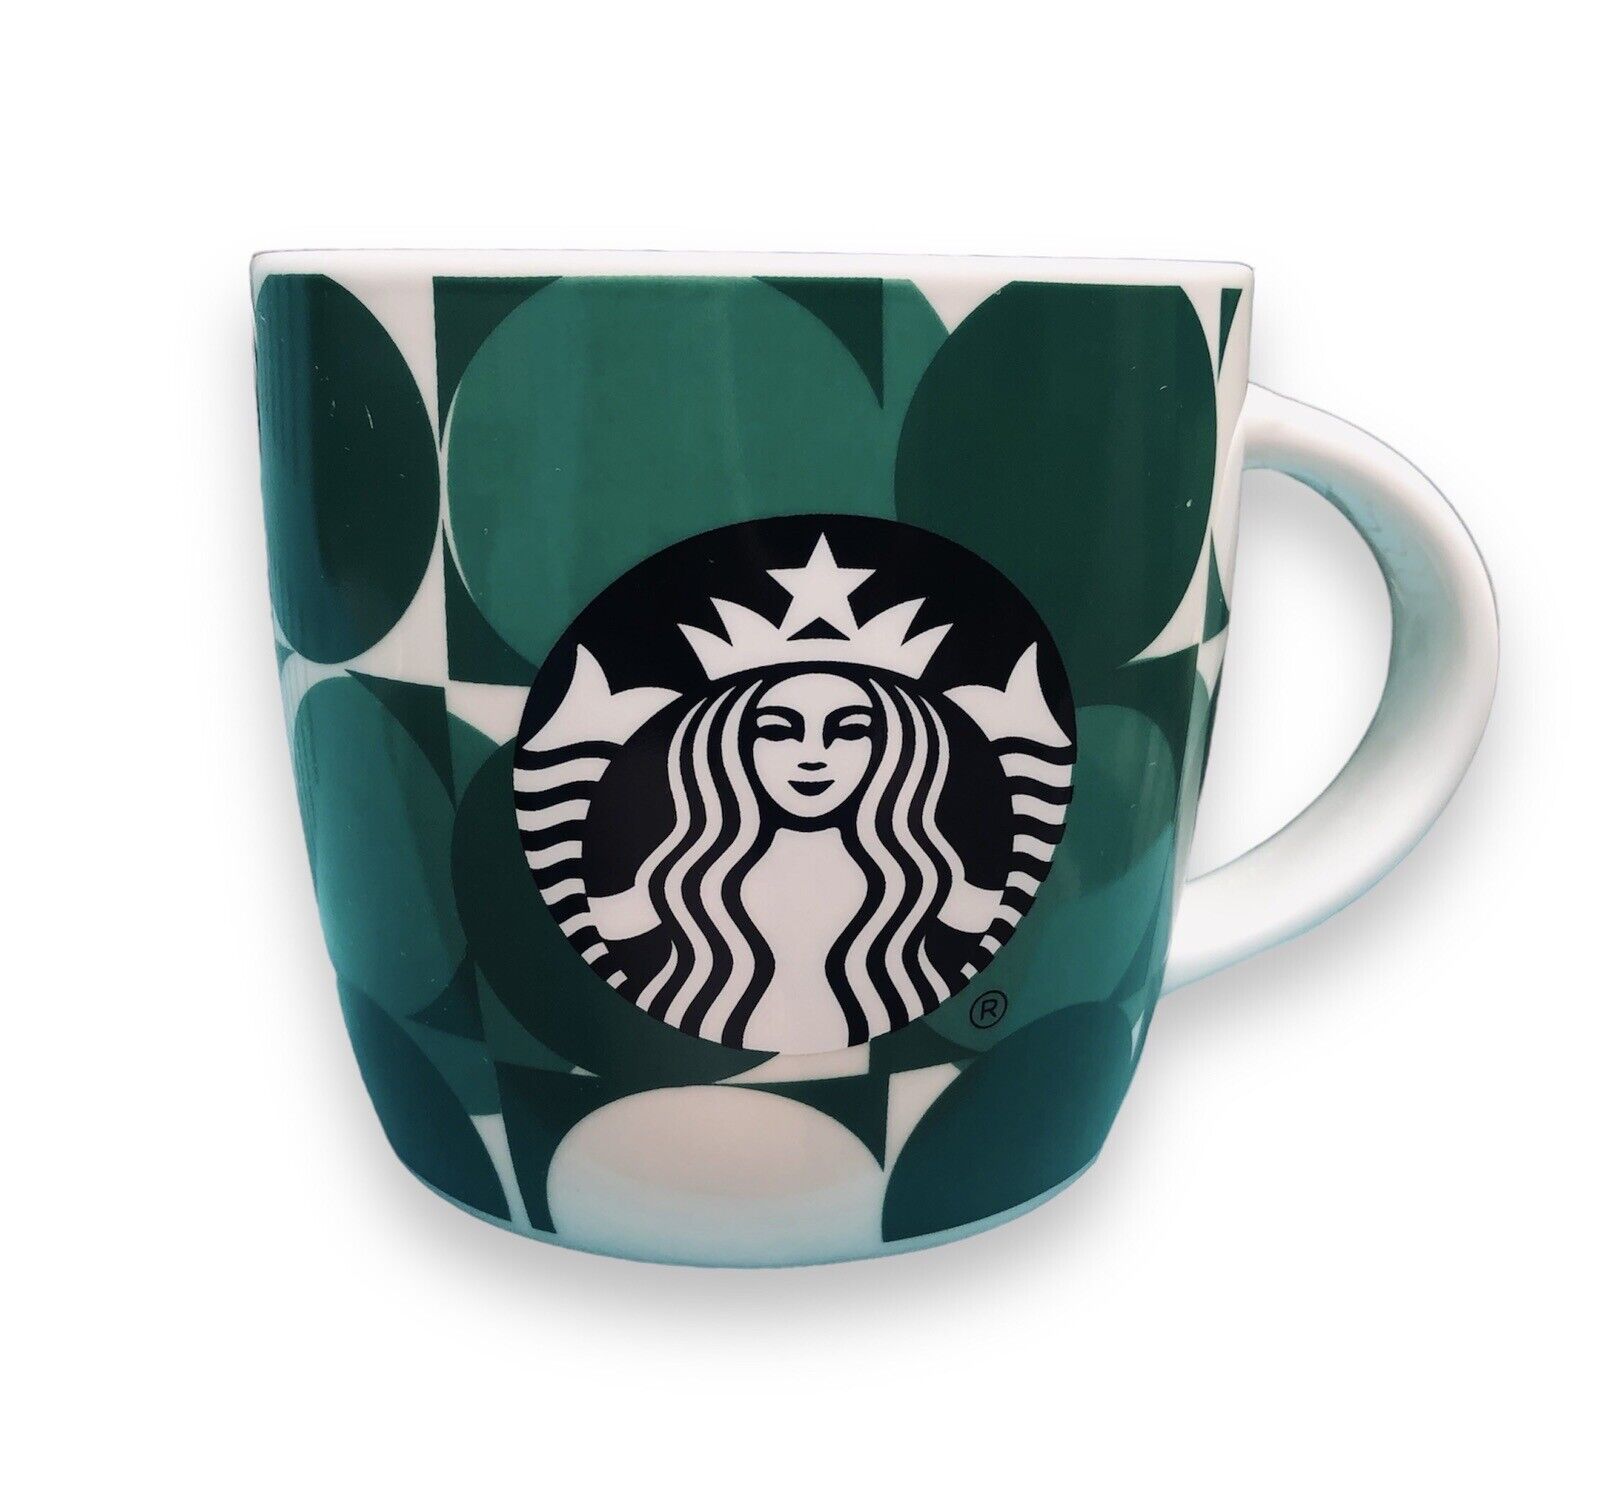 Starbucks Green White Polka Dot Mug Coffee Cup